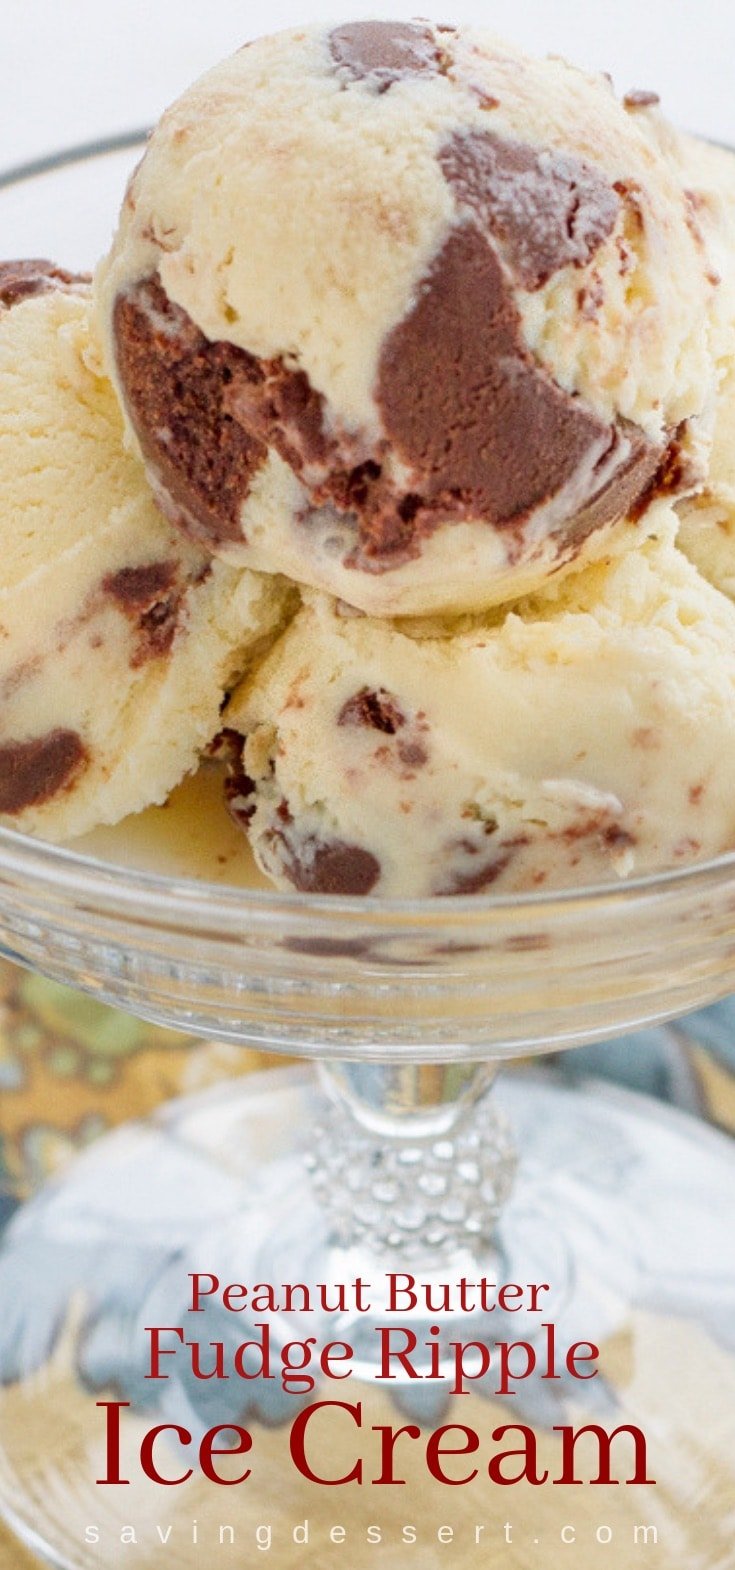 Scoops of peanut butter fudge ripple ice cream